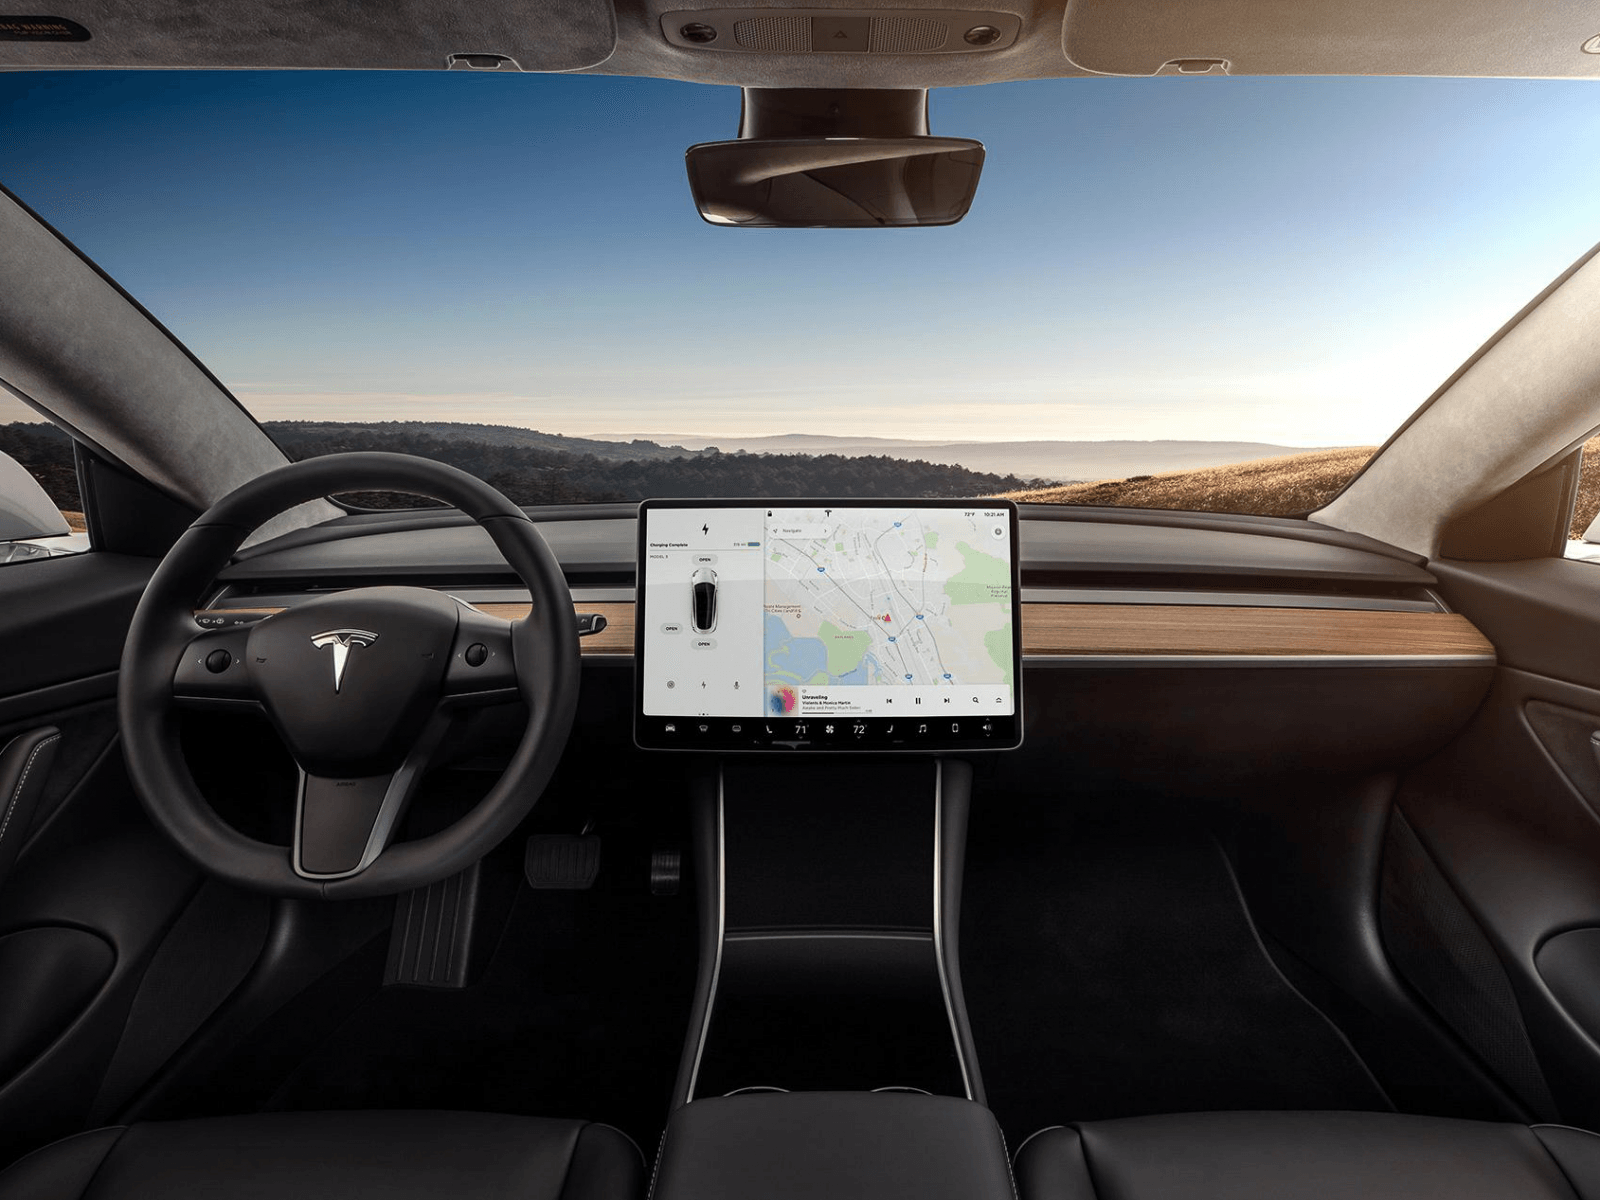 Tesla Model 3 wallpaper, free downloadautoportal.com